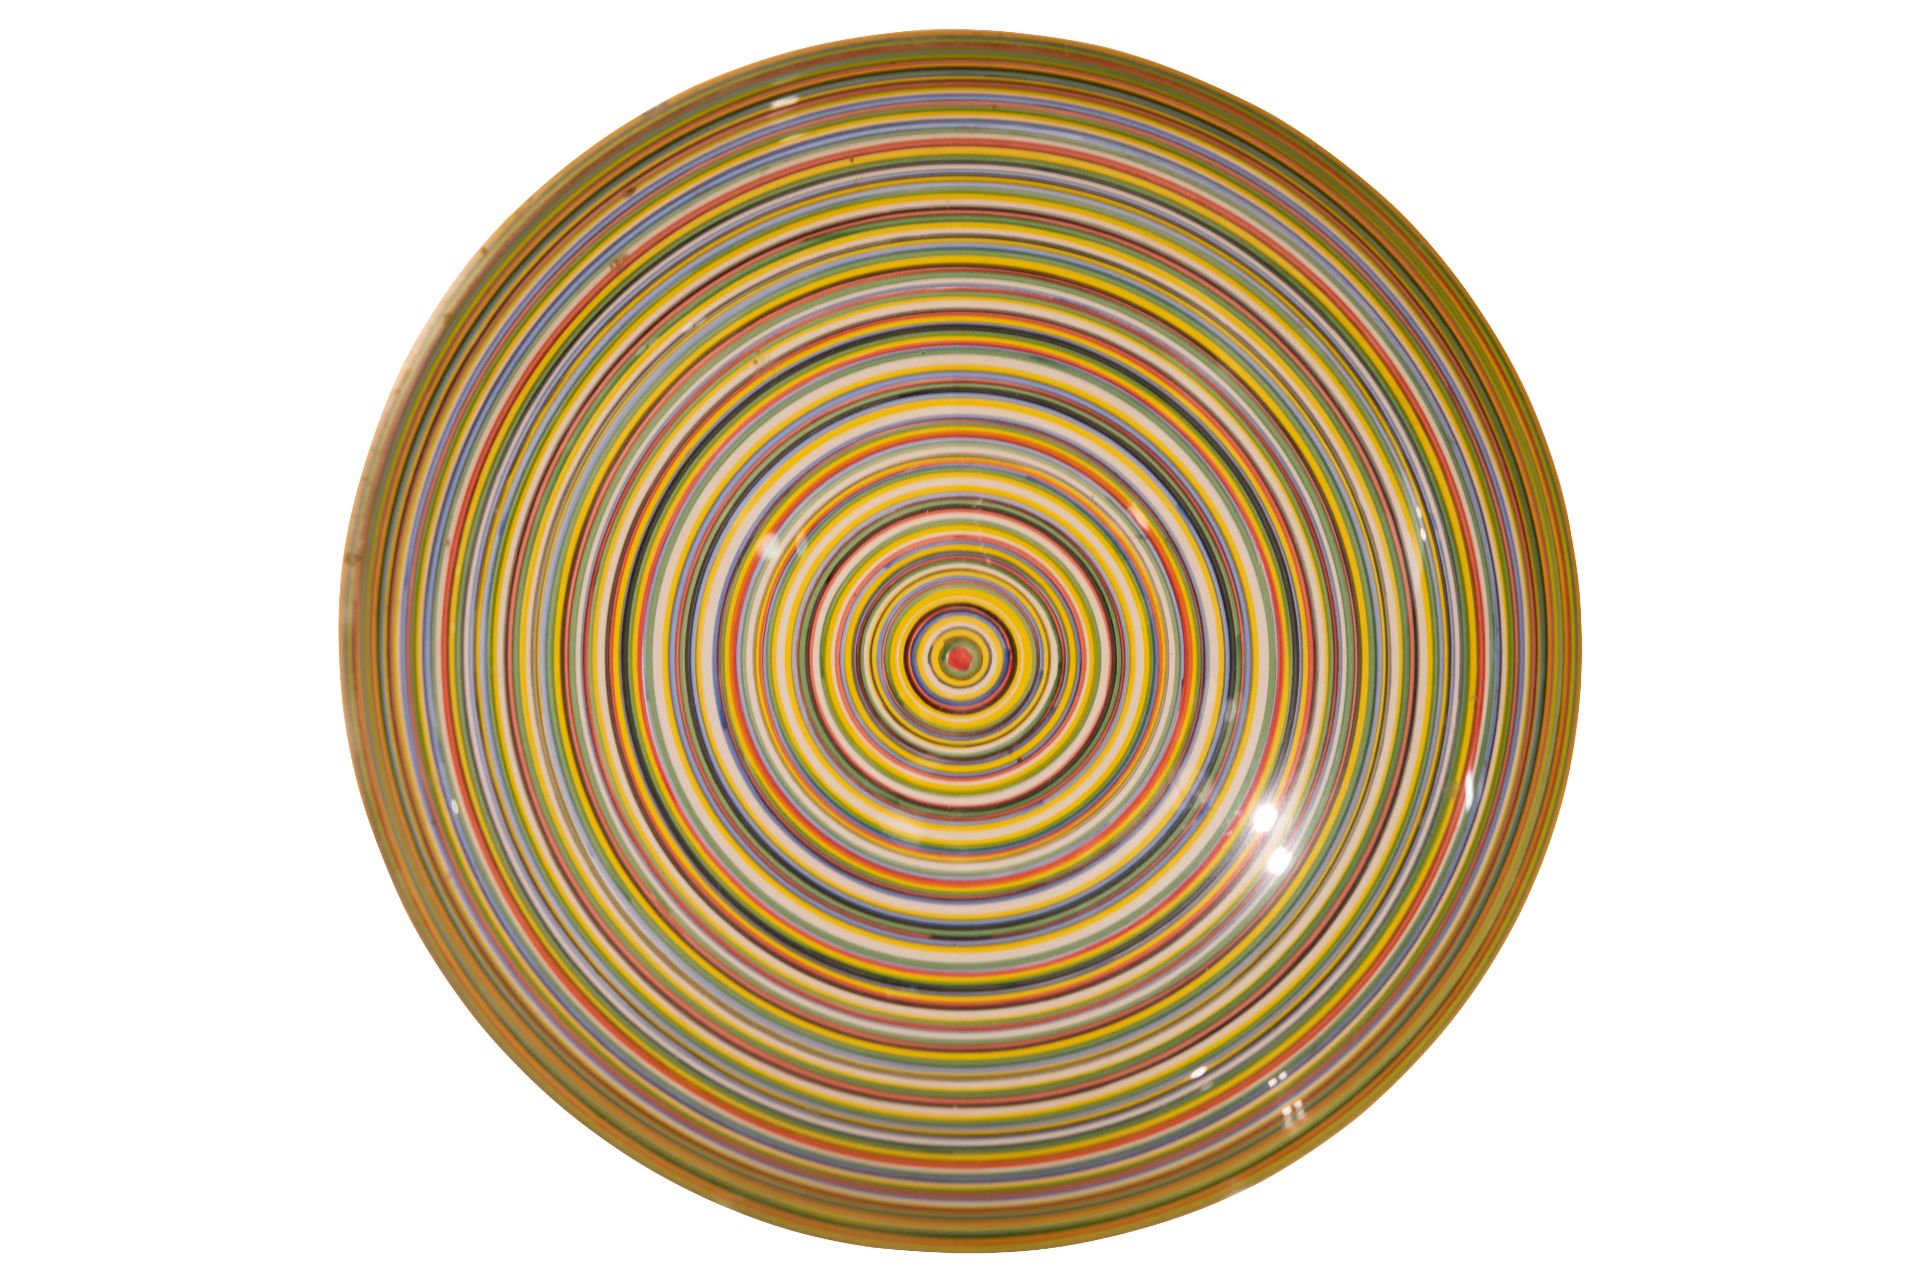 Glas Schale bunt bemalt | Glass Bowl Painted with Colorful Circles